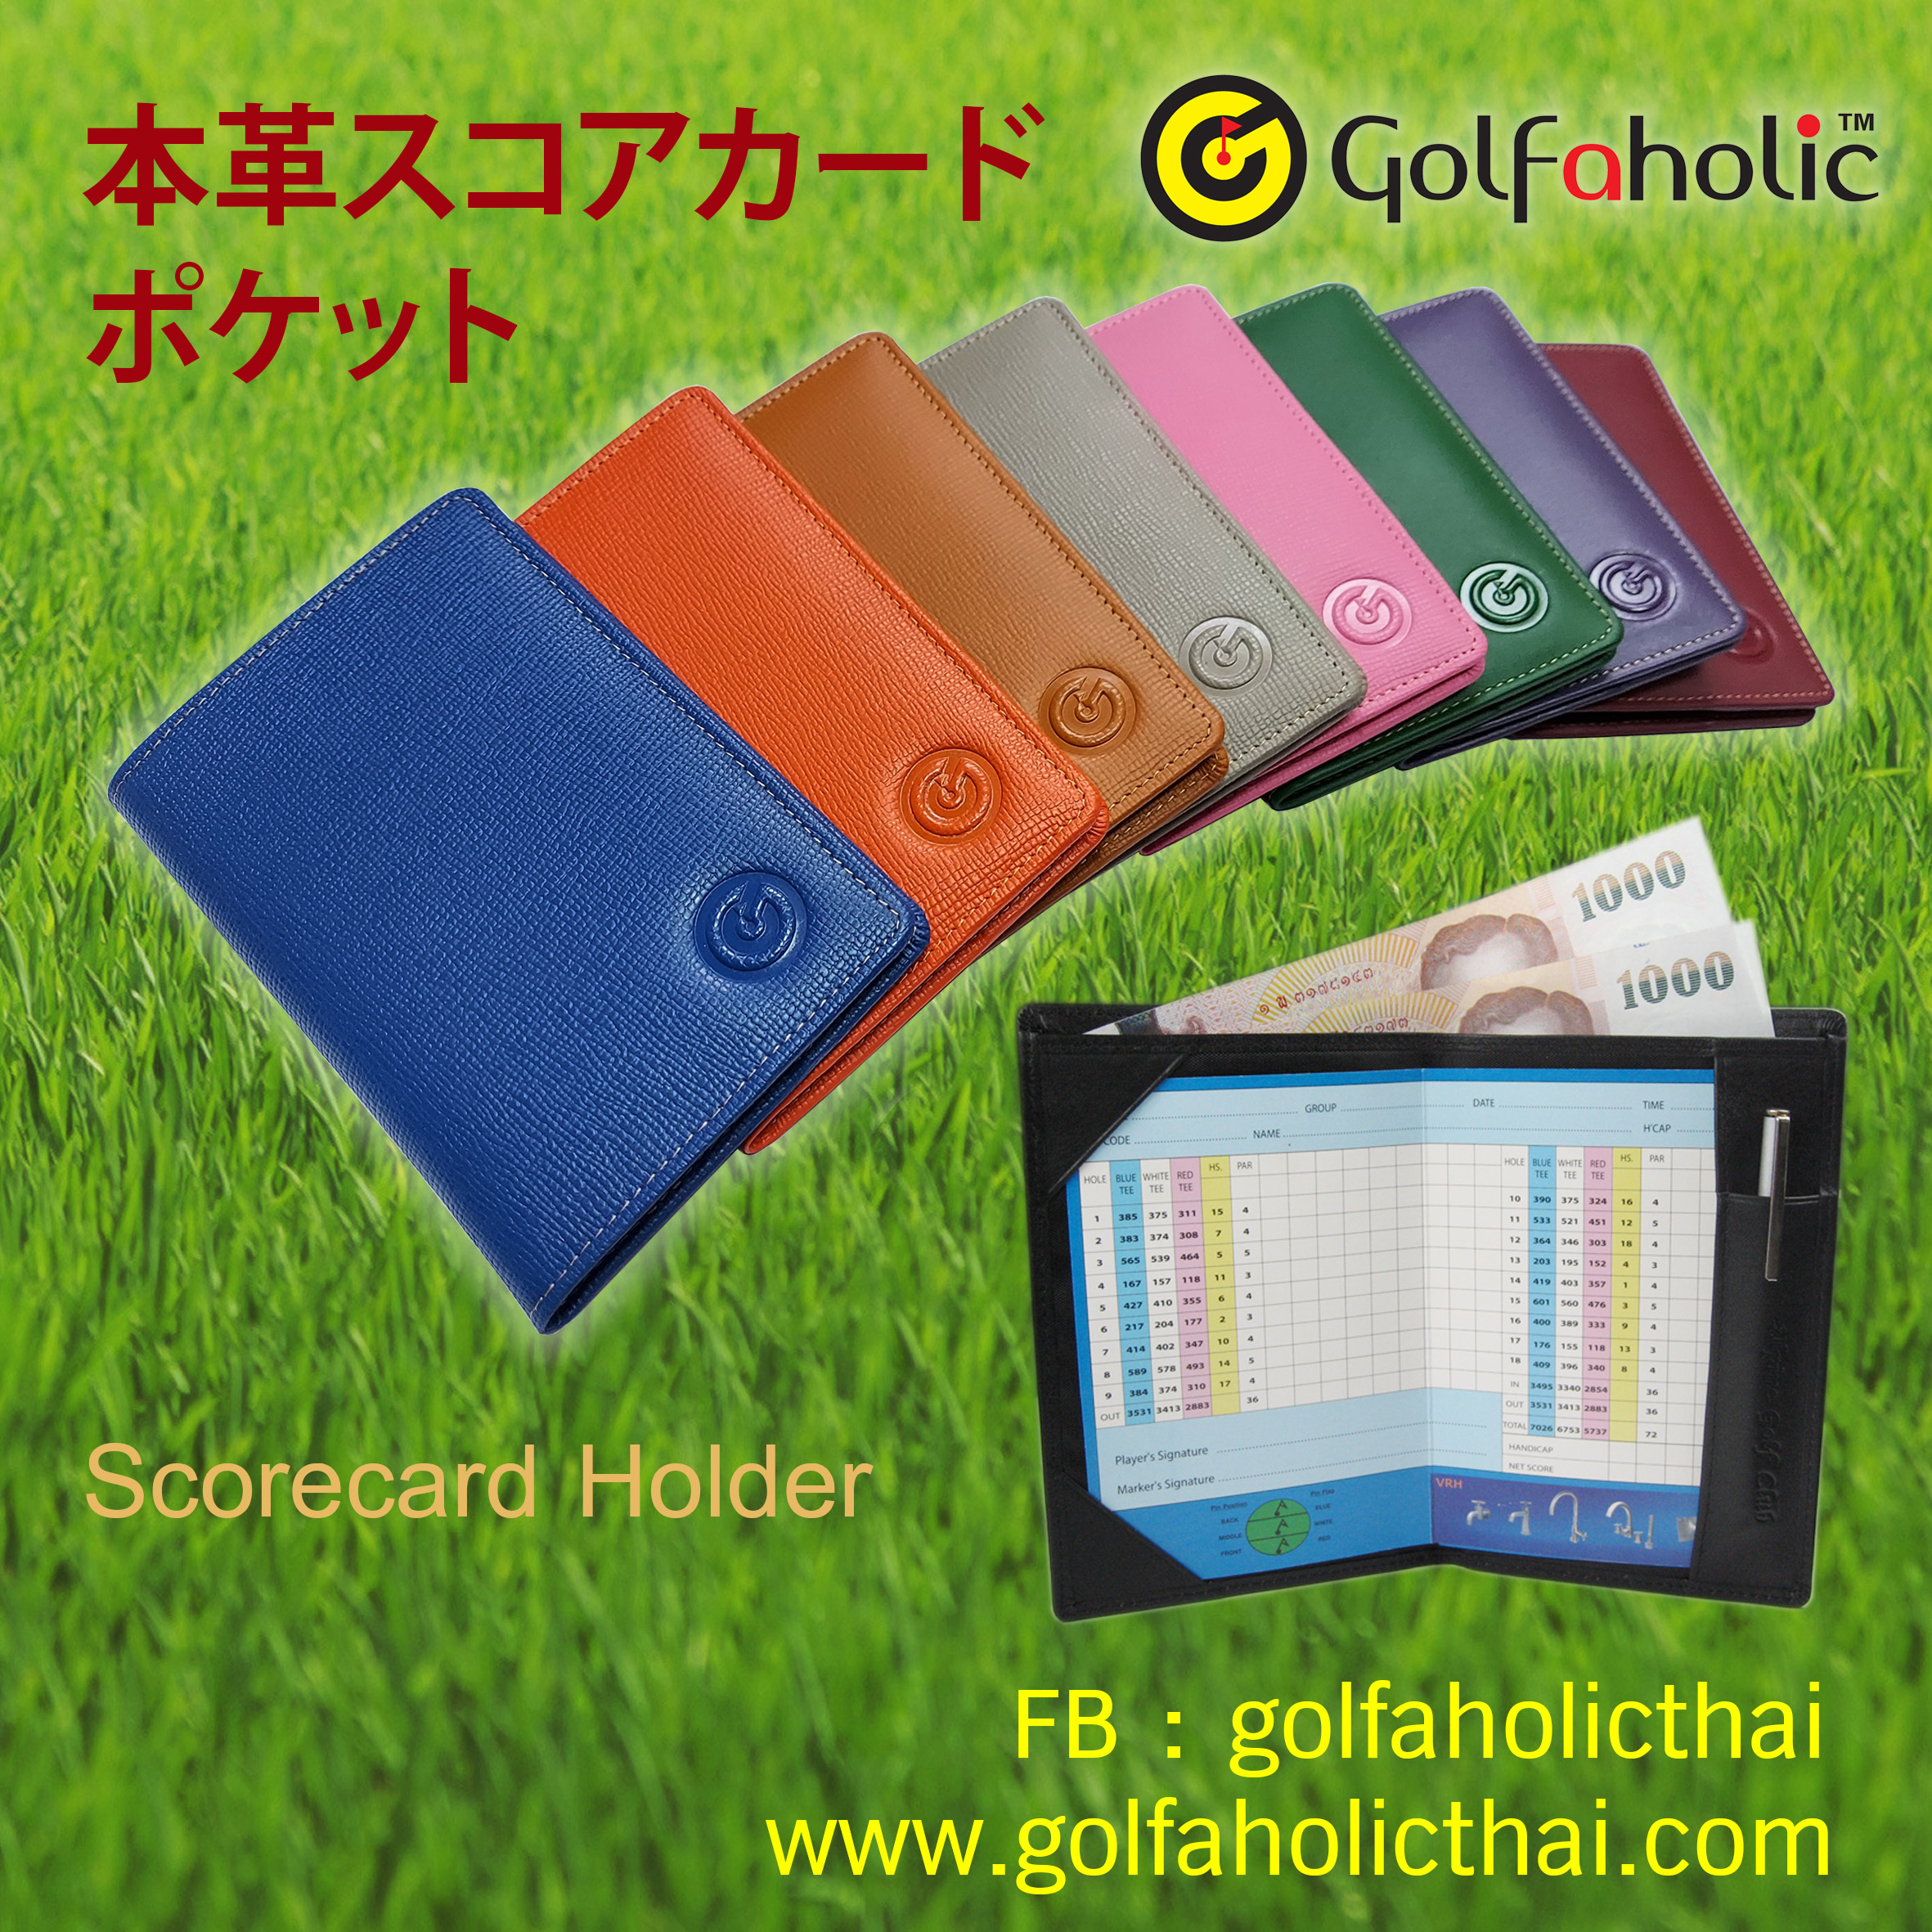 Golfaholic กอล์ฟ ปกหนังแท้ใส่ กอล์ฟสกอร์การ์ด Golf Genuine Leather Scorecard Holder